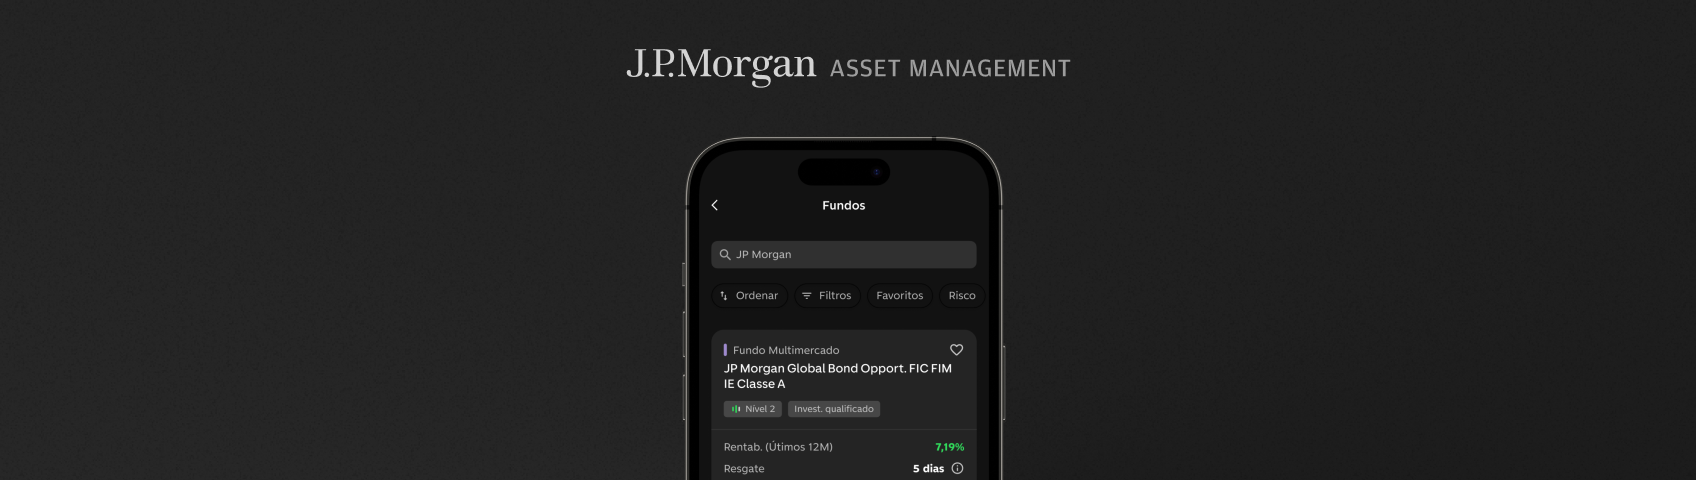 Celular aberto no app C6 Bank na tela de fundos do JP Morgan